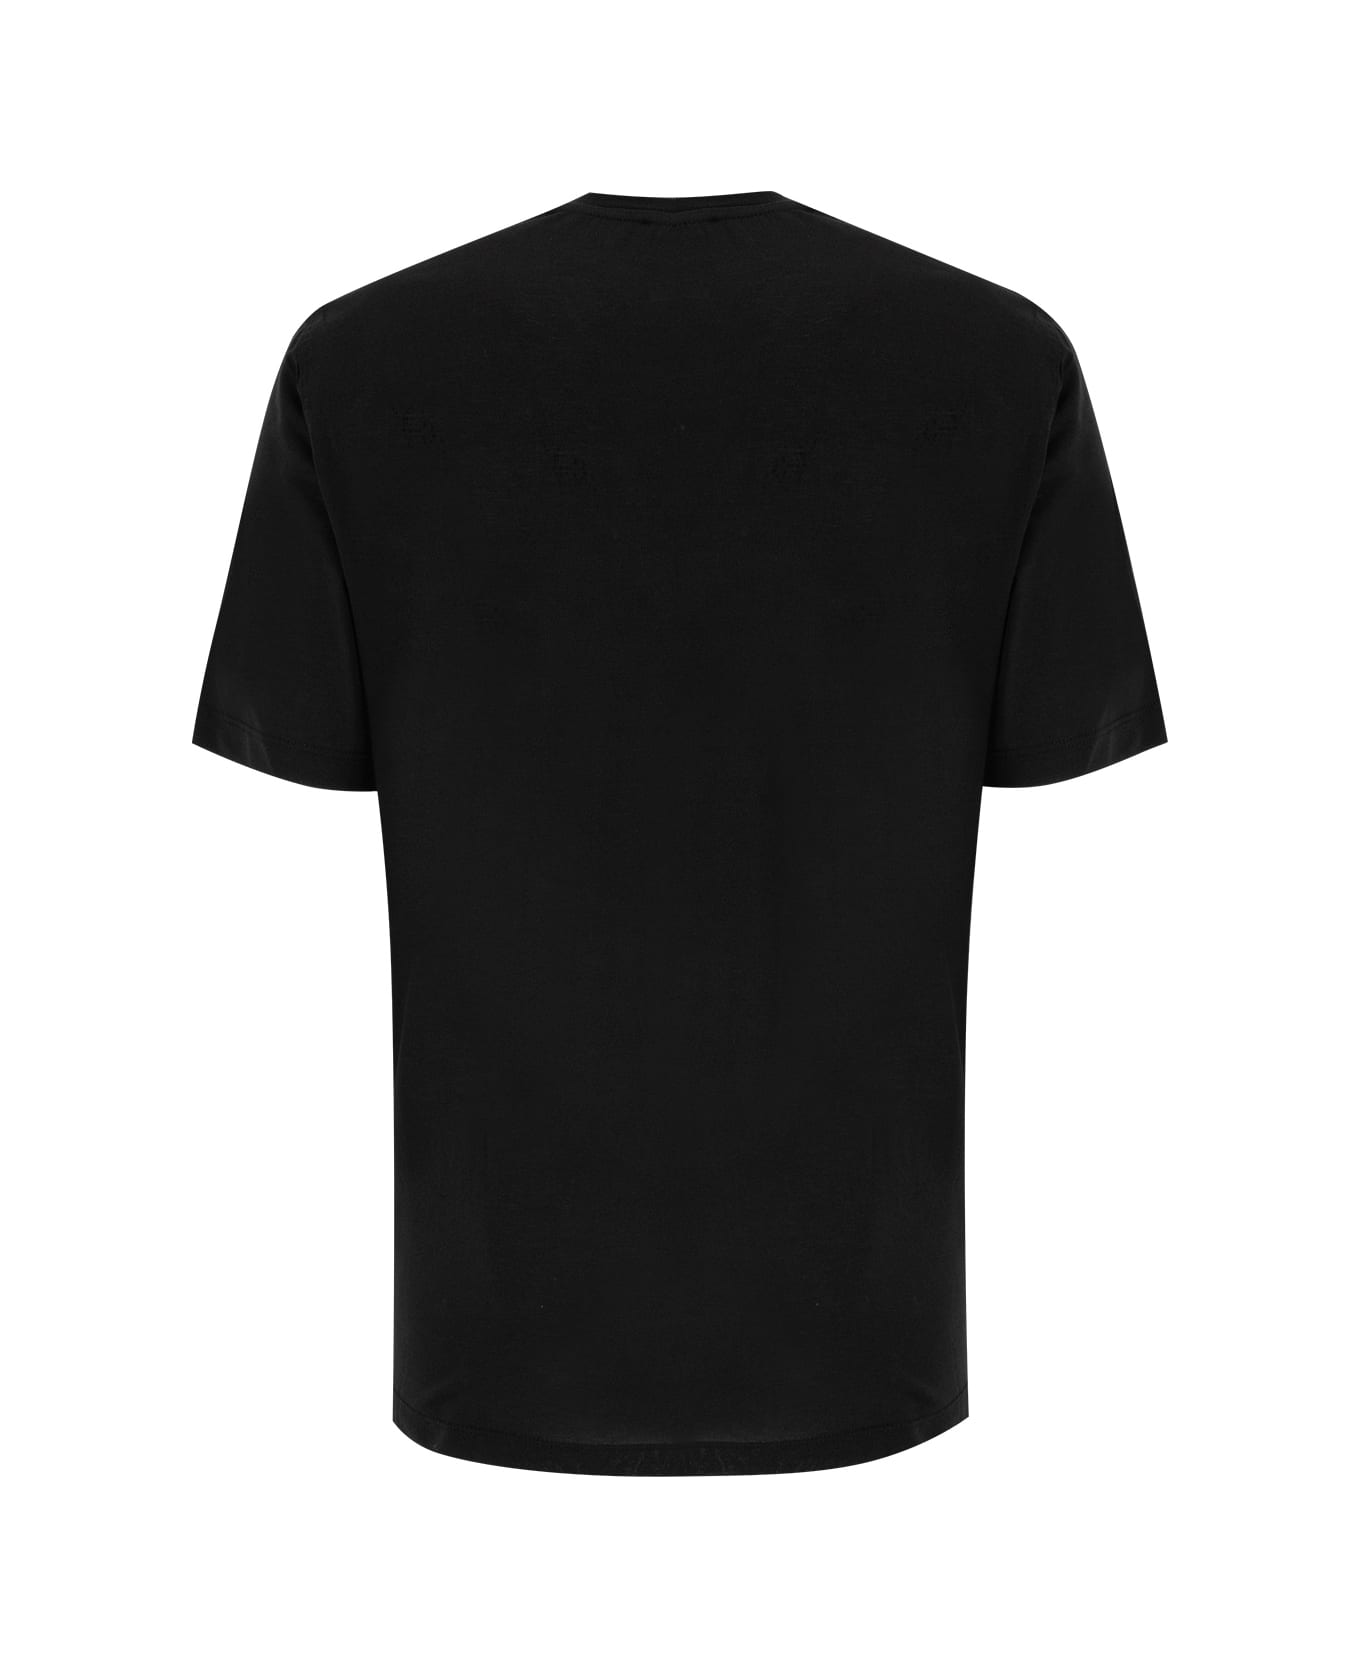 Kired T-shirt - BLACK